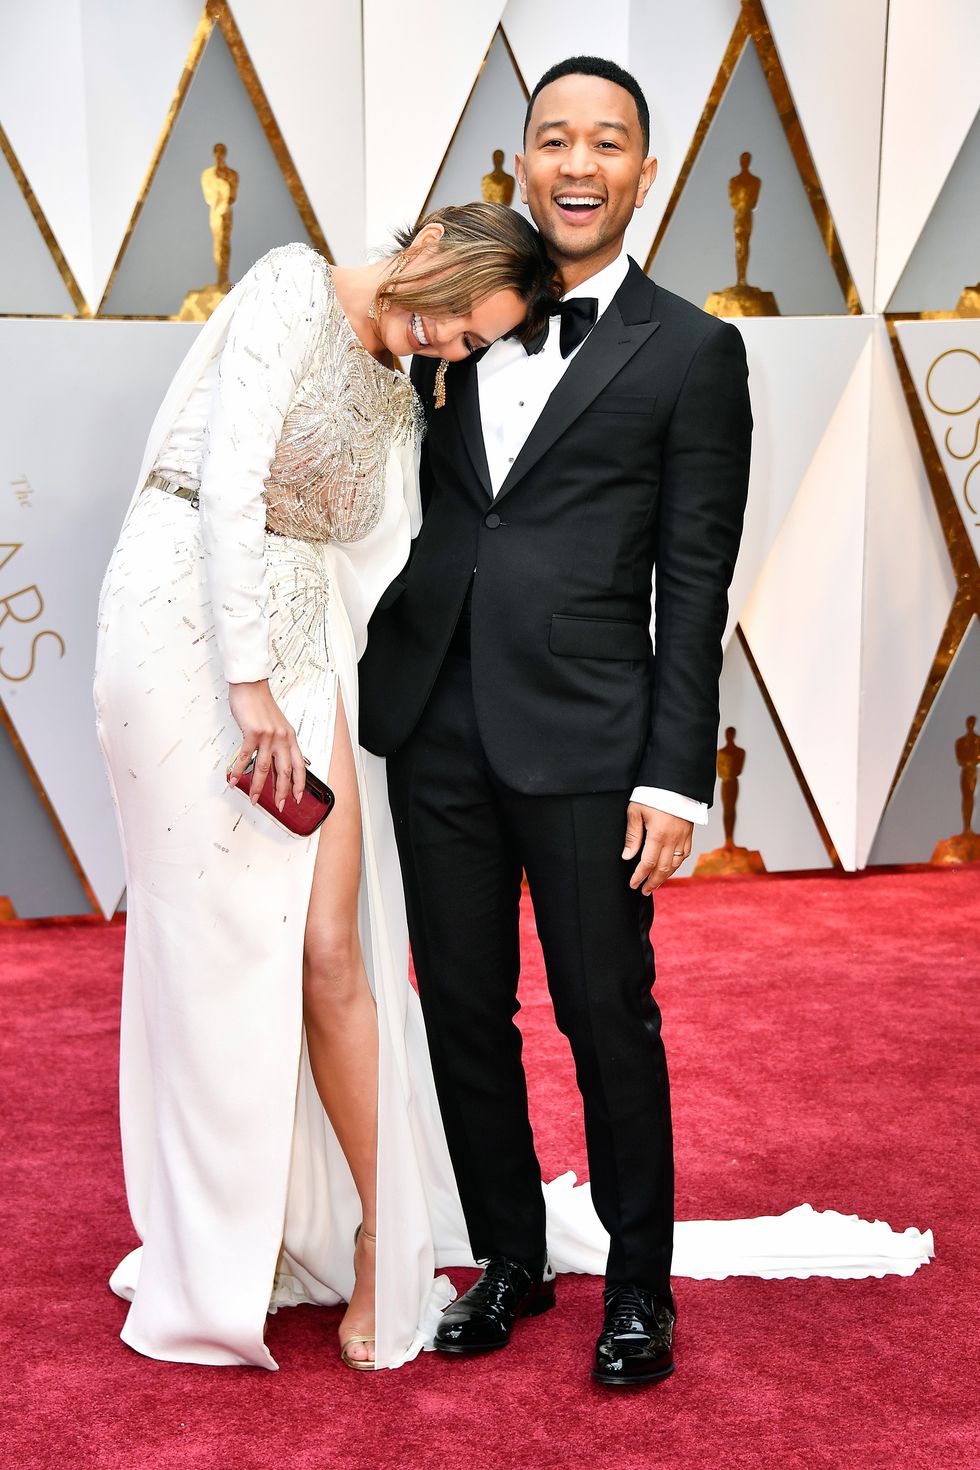 John Legend Wears Gucci Tuxedo for Oscars 2017 Red Carpet